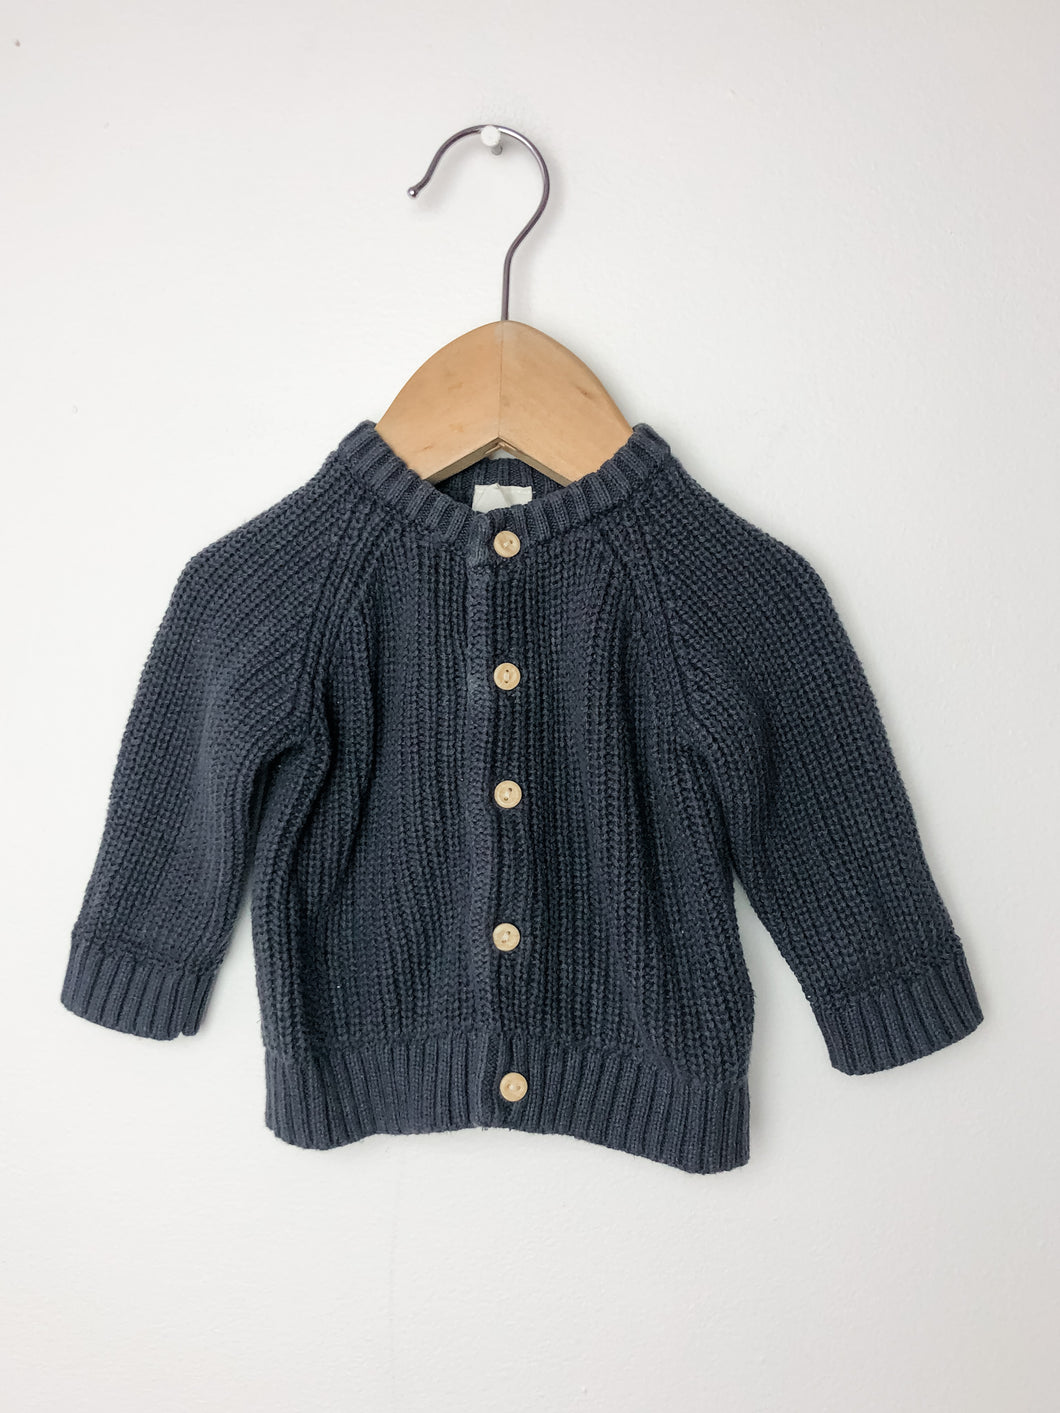 Blue H&M Knit Sweater Size 2-4 Months